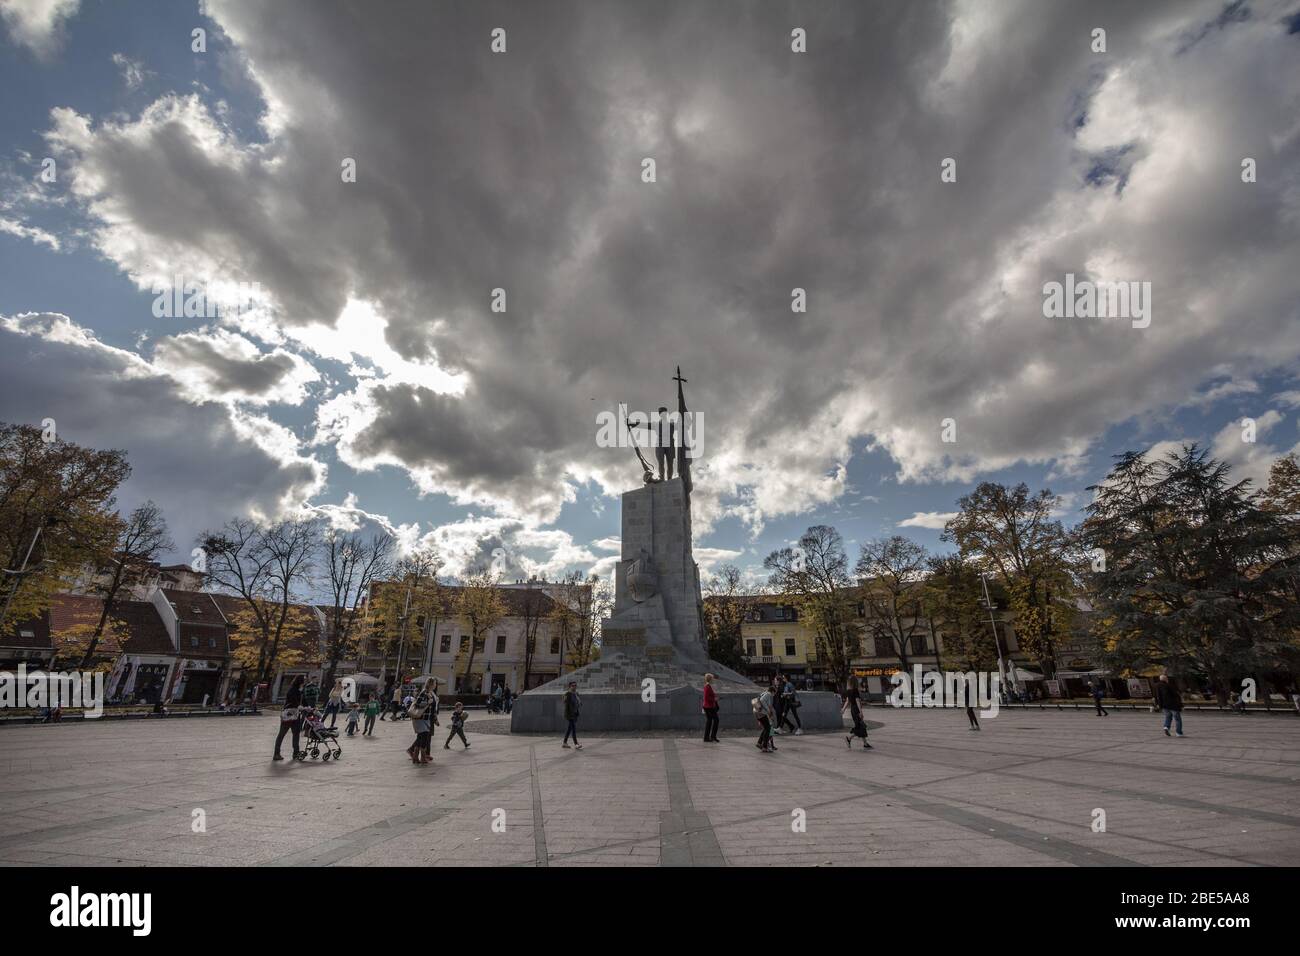 KRALJEVO, SERBIA - NOVEMBER 10, 2019: Monument to the Serbian Soldier, called Milutin, on the main square of Kralevo, Trg Srpskih Ratnika, a major lan Stock Photo